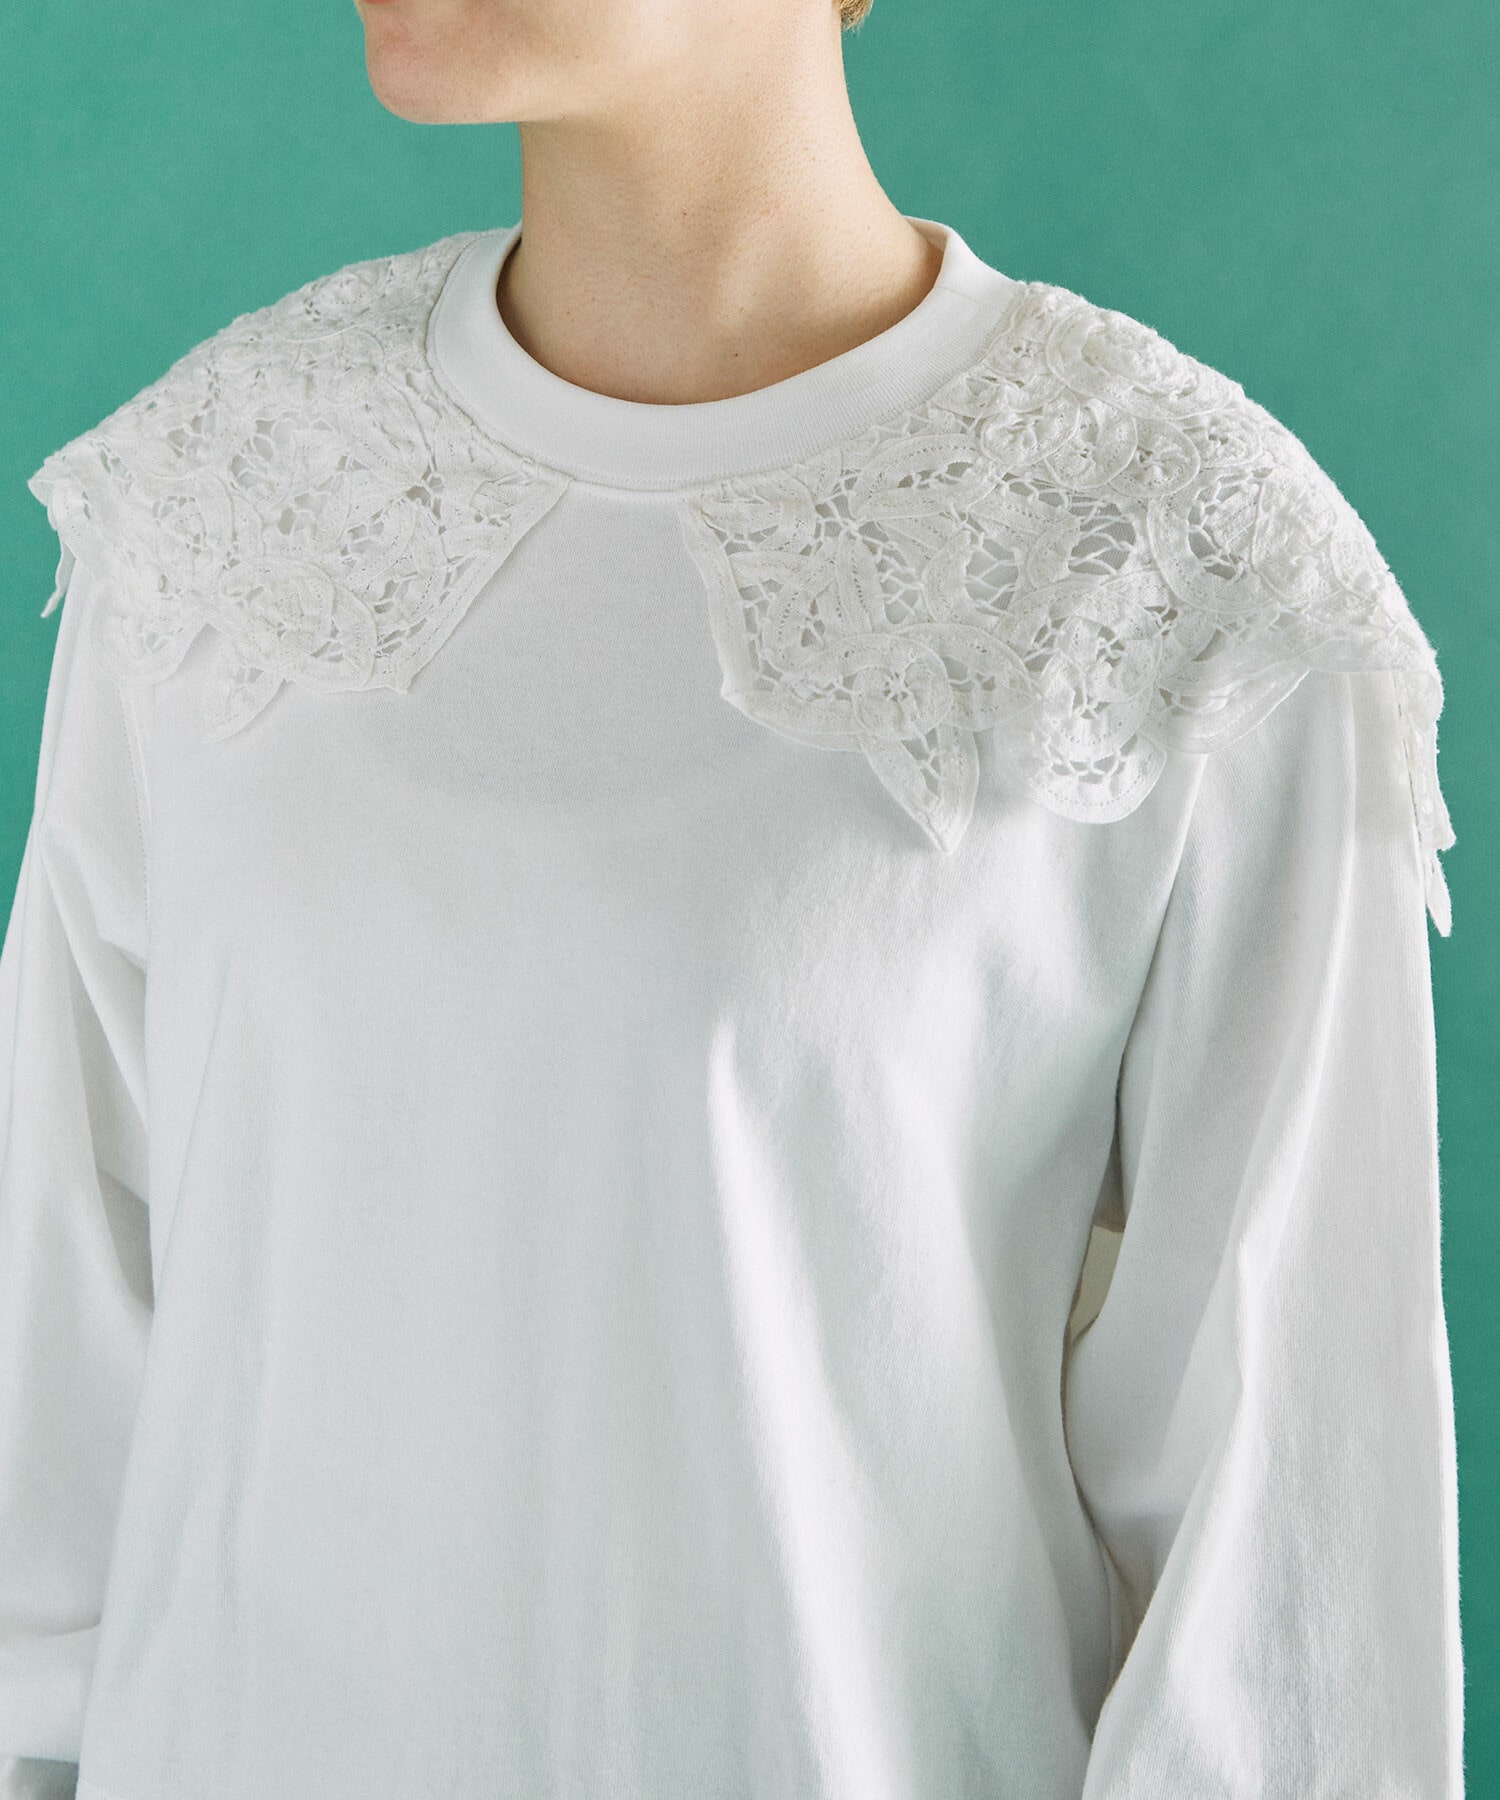 AMBIDEX Store △○バテンレース ショルダー Tシャツ(F WHITE): FLAT 